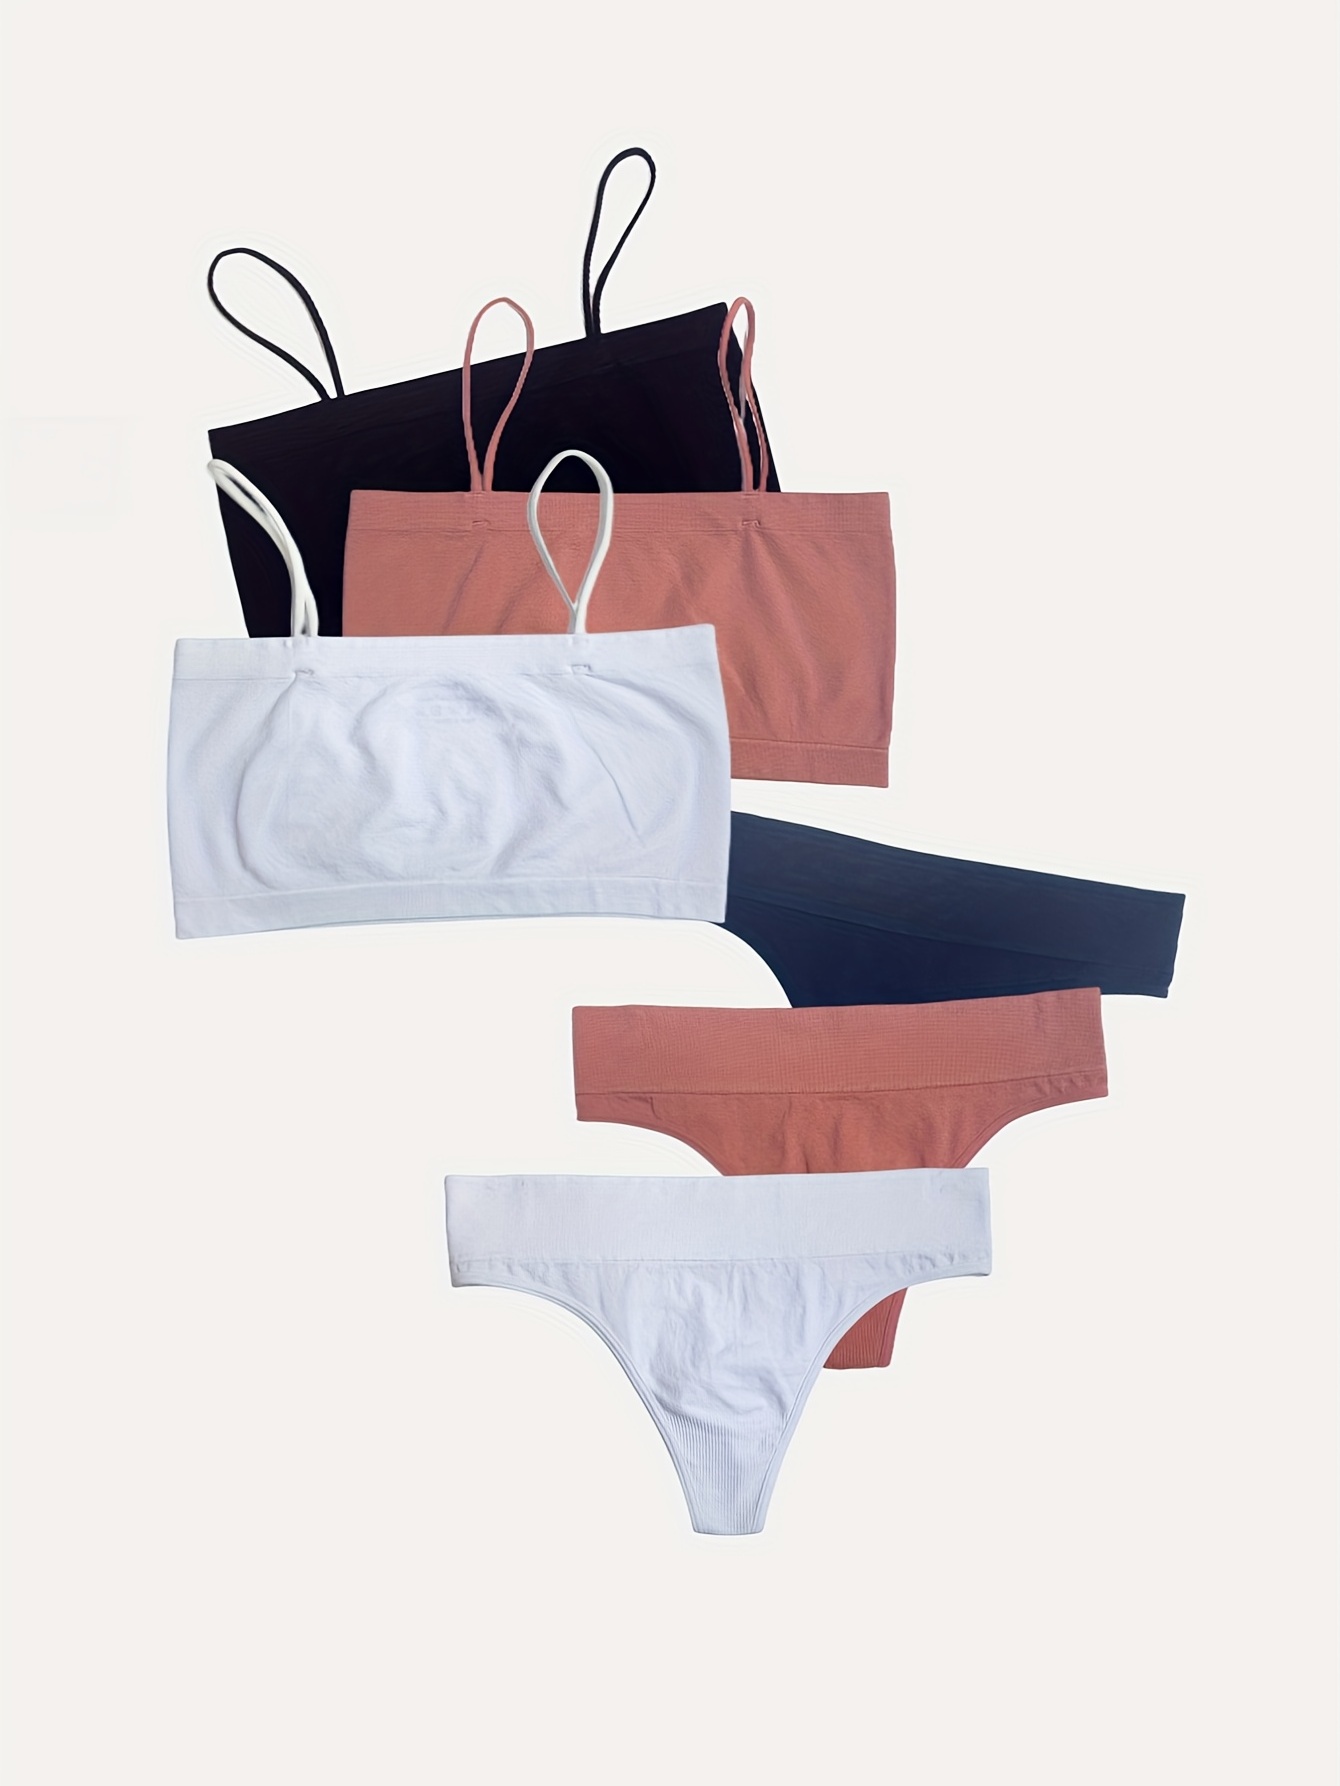 H&M 7 items: 5 Thongs, 2 Brazilian Seamless in Size M Lingerie/Underwear New